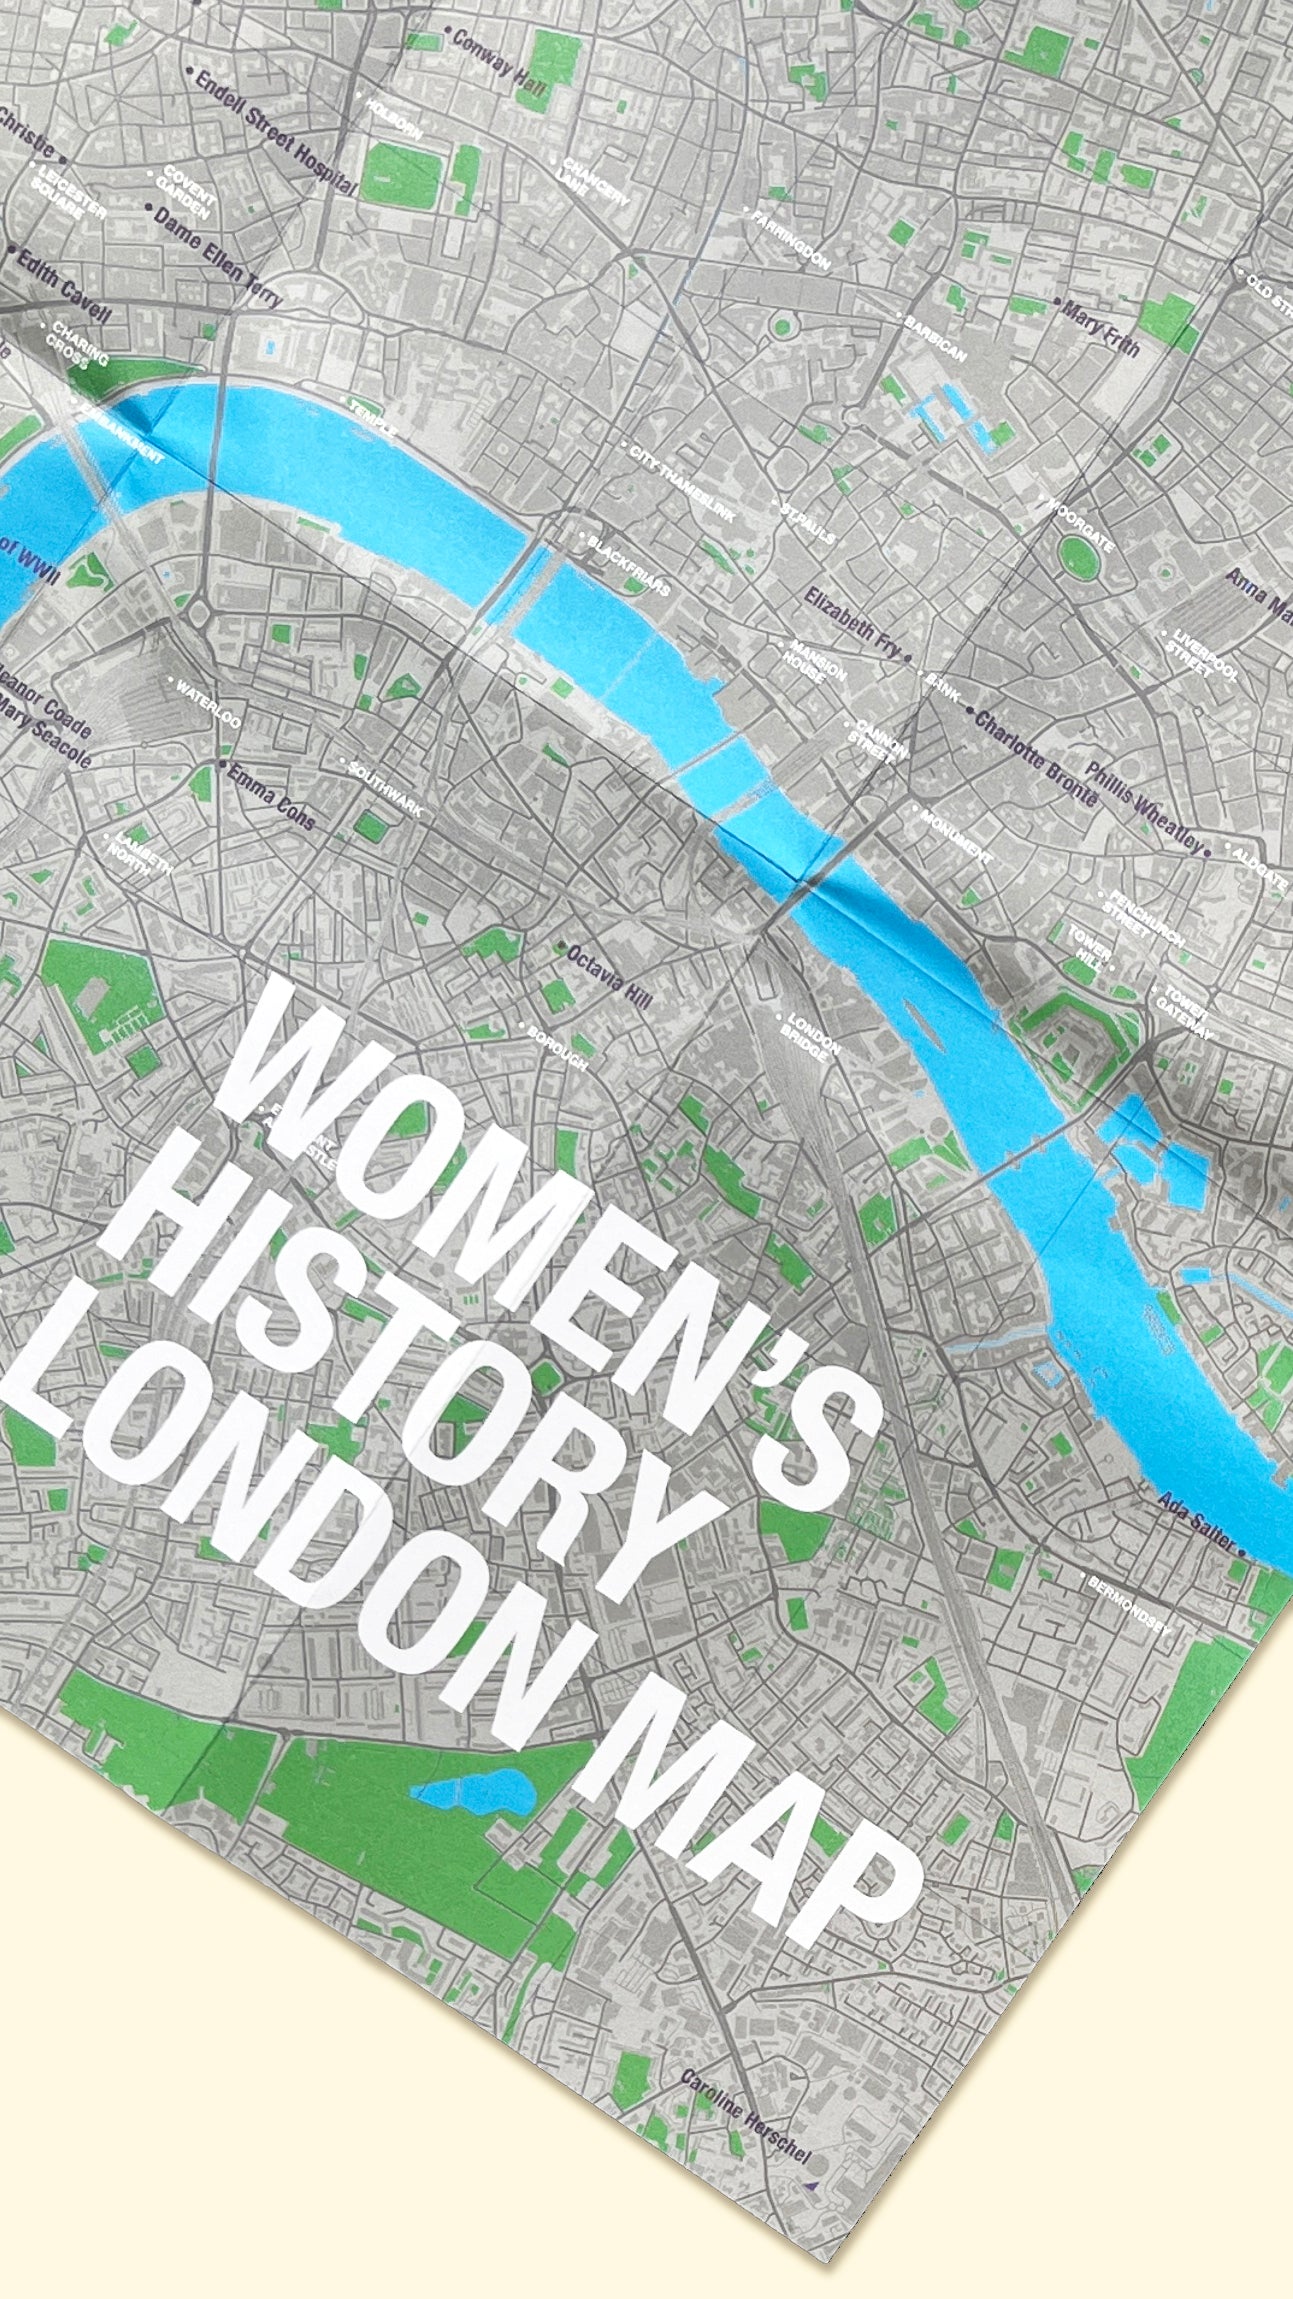 Women's History London Map